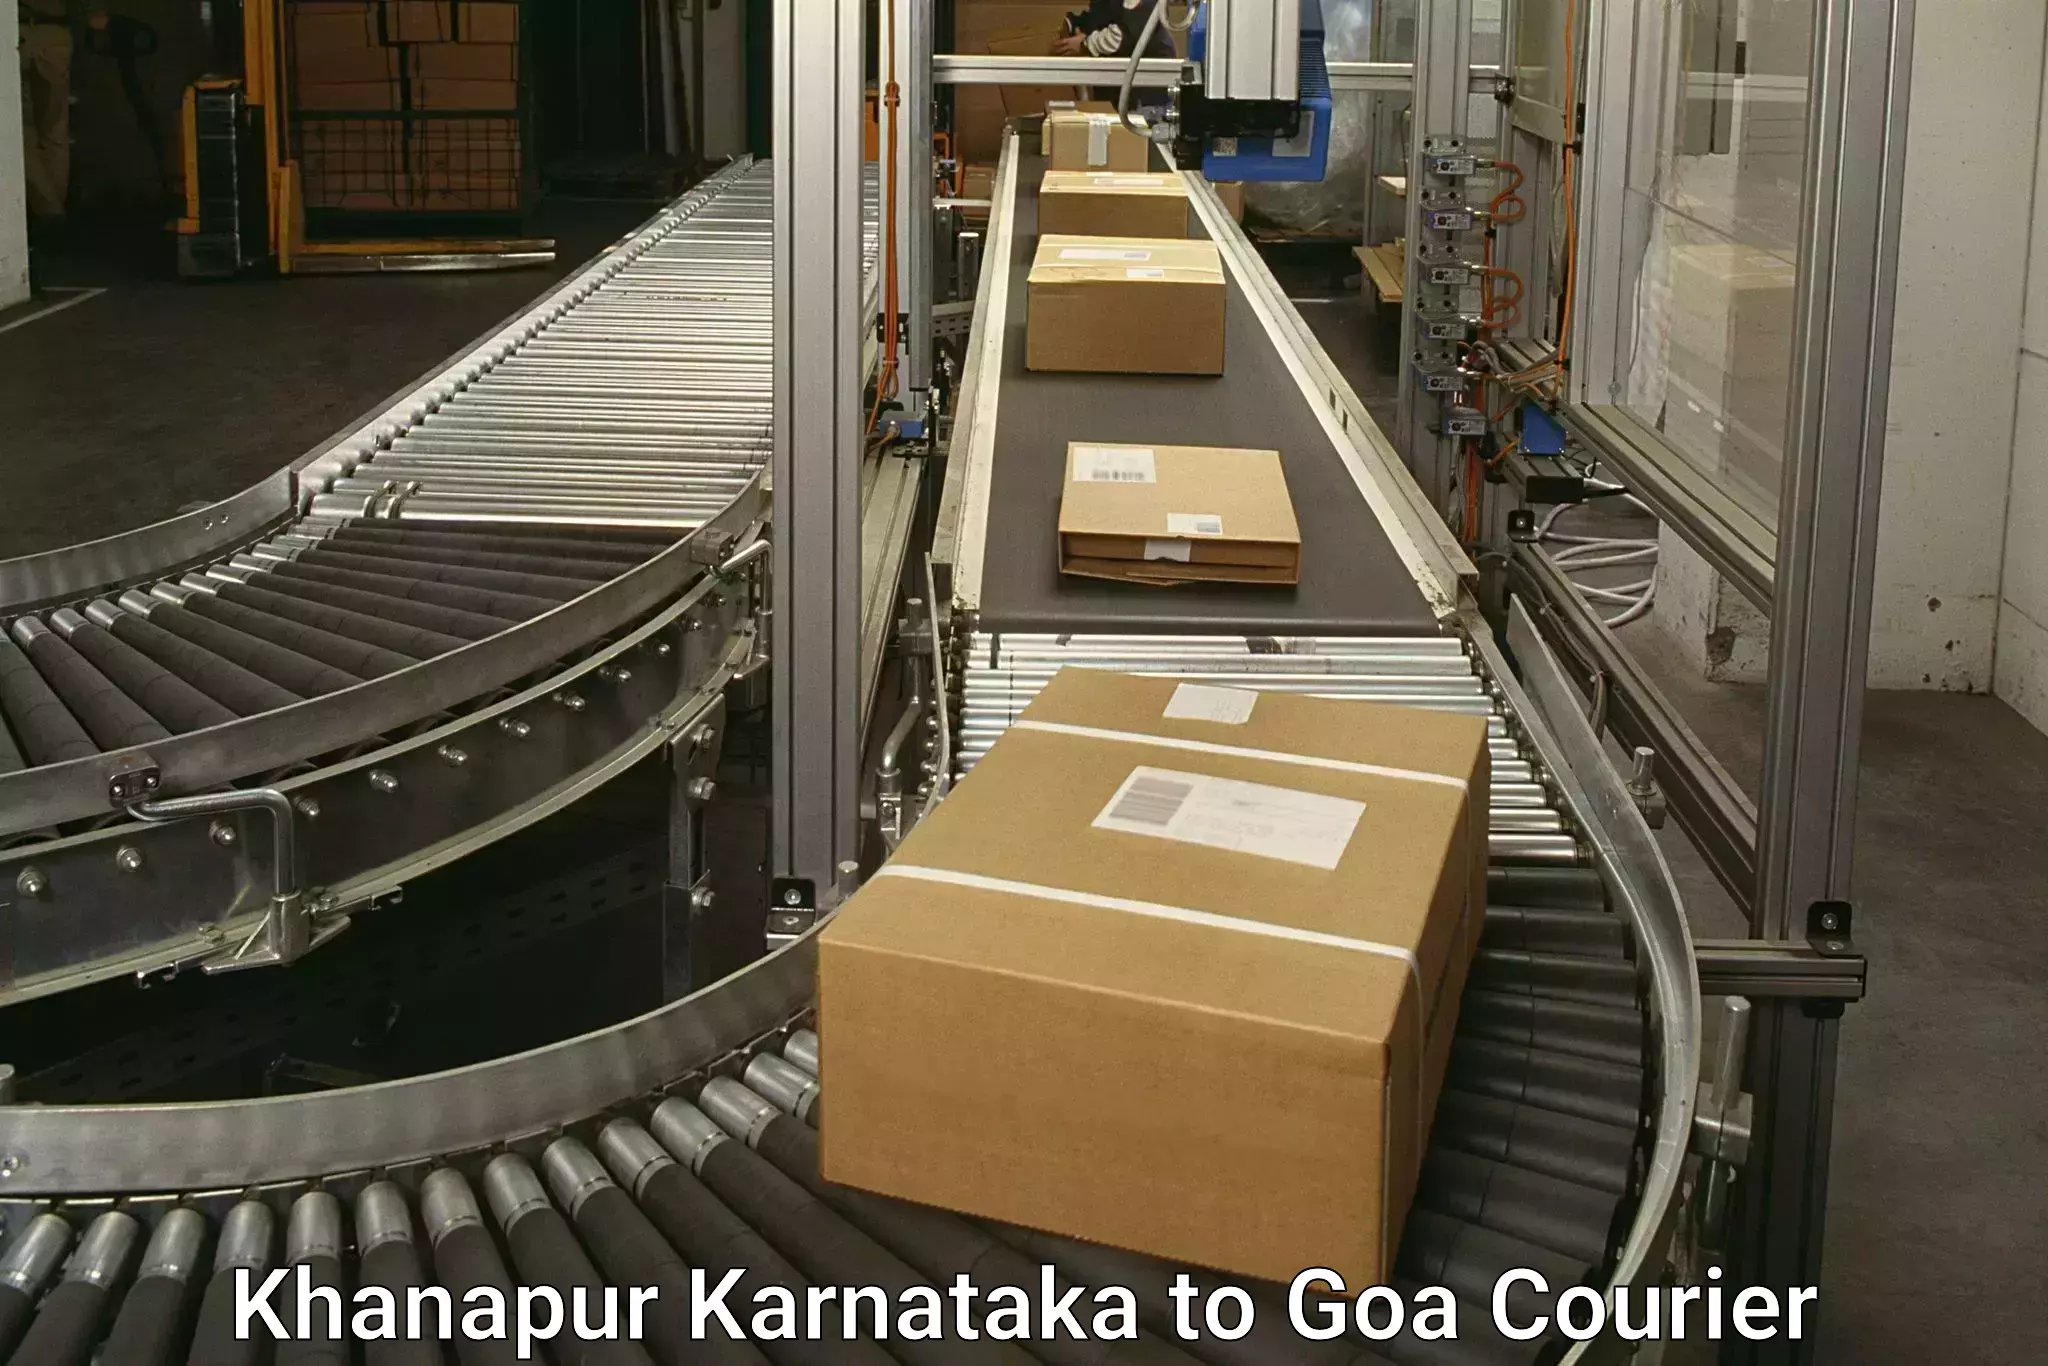 Round-the-clock parcel delivery Khanapur Karnataka to Goa